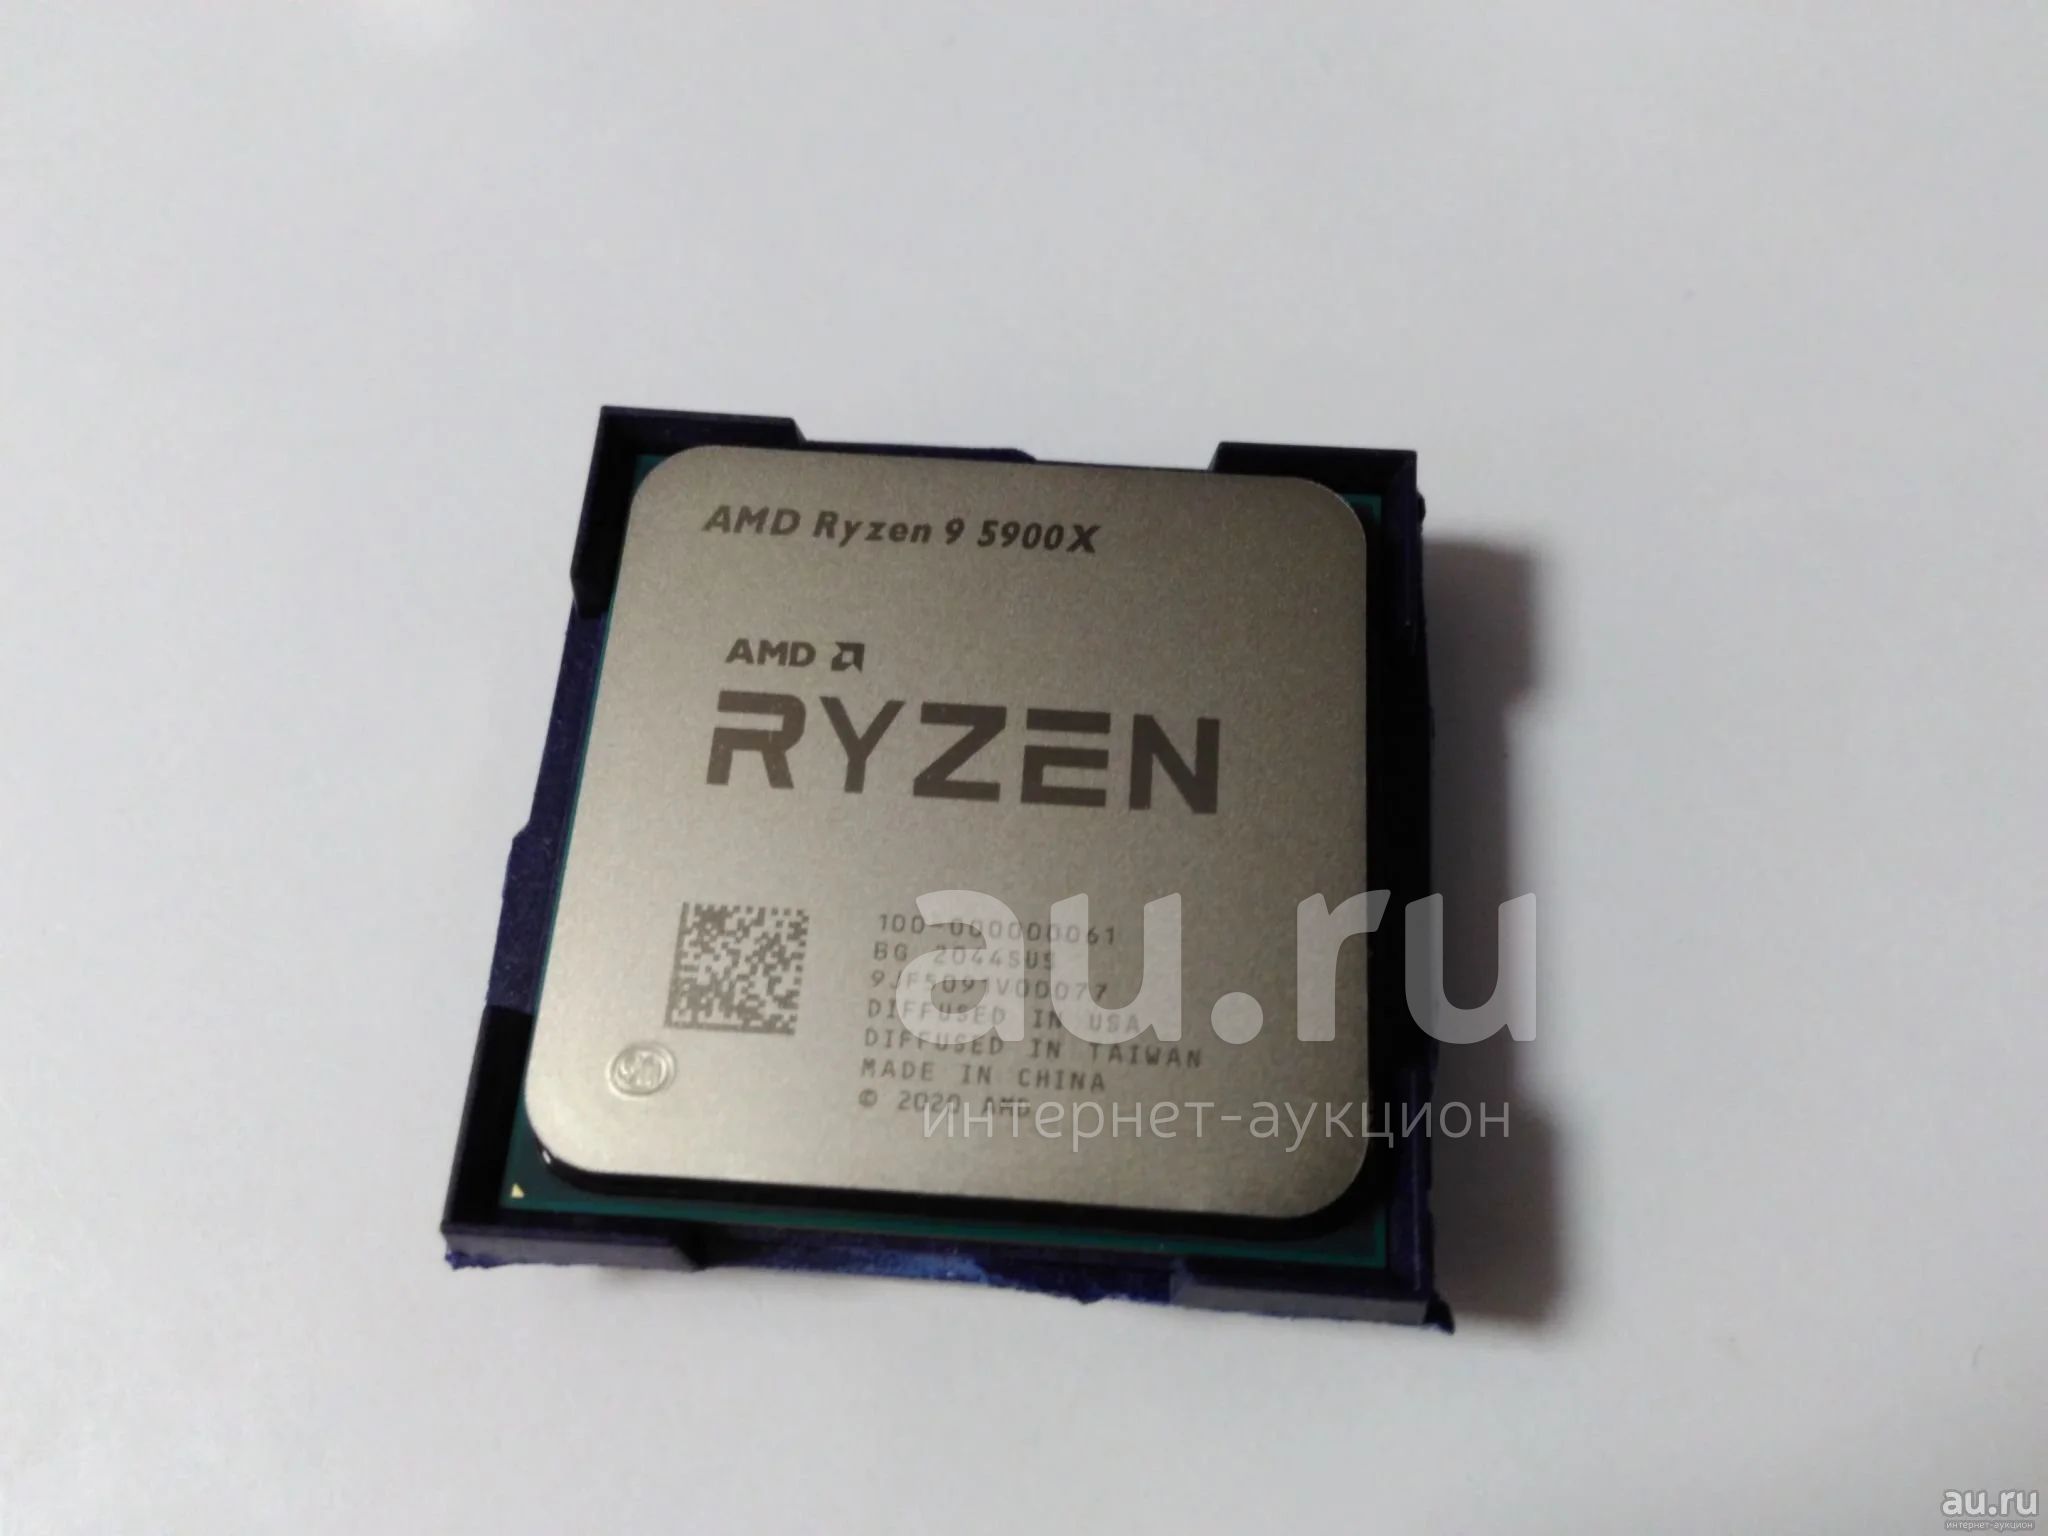 Amd 9 5950x купить. AMD 9 5900x. Процессор AMD Ryzen 9 5900x Box. Процессор AMD Ryzen 9 3900x. AMD Ryzen 9 5900x 12 Core.